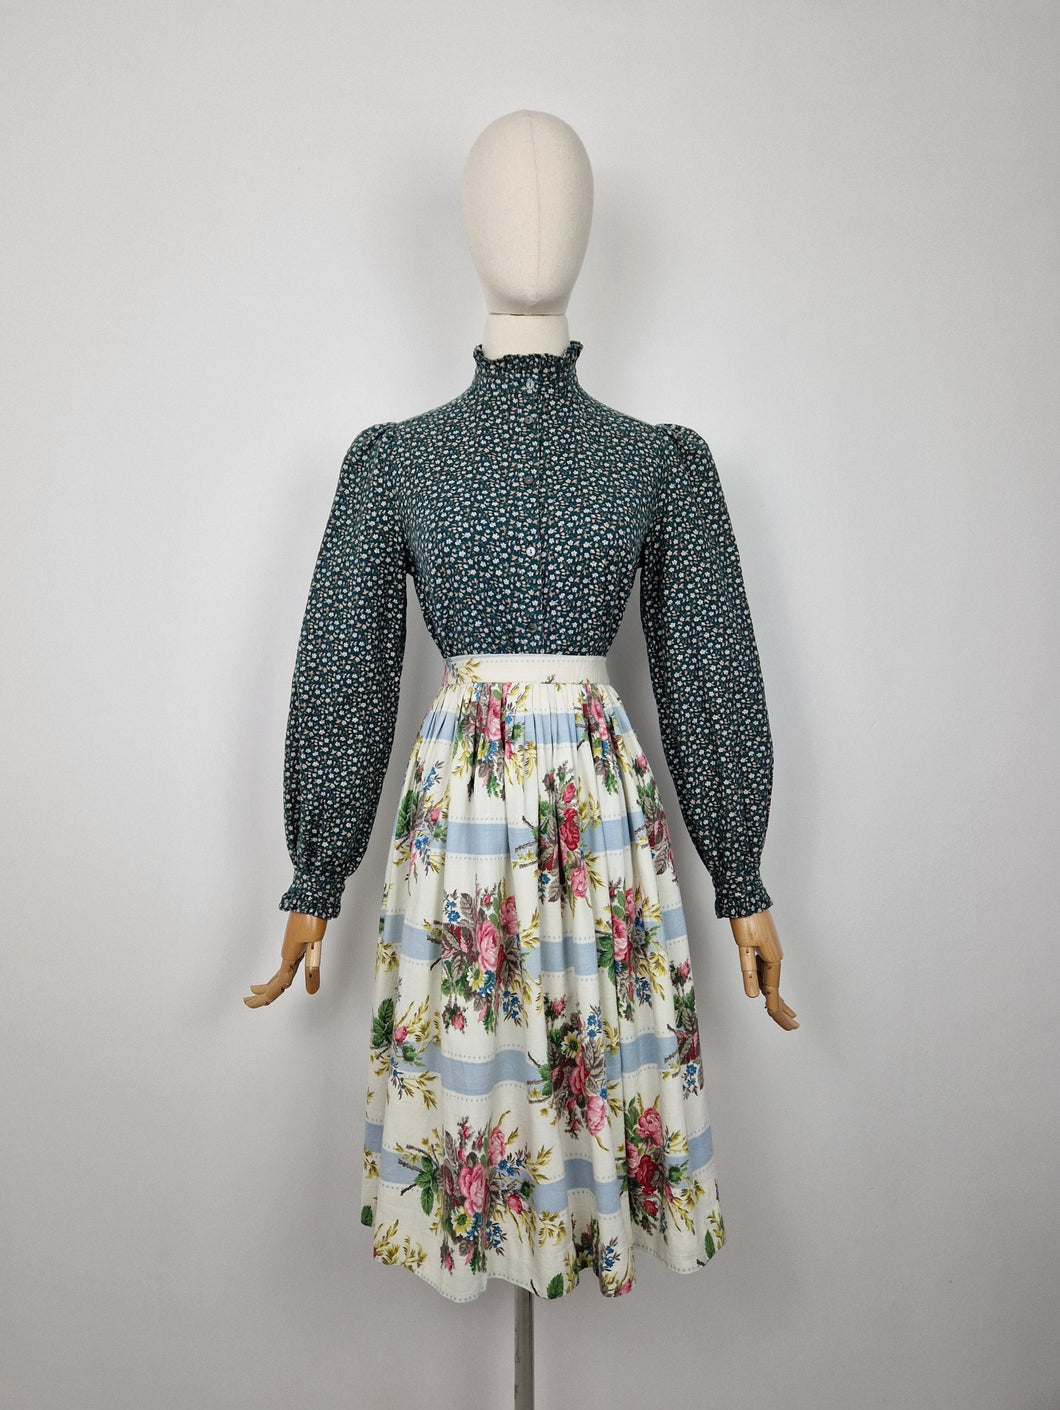 Vintage handmade cottagecore skirt